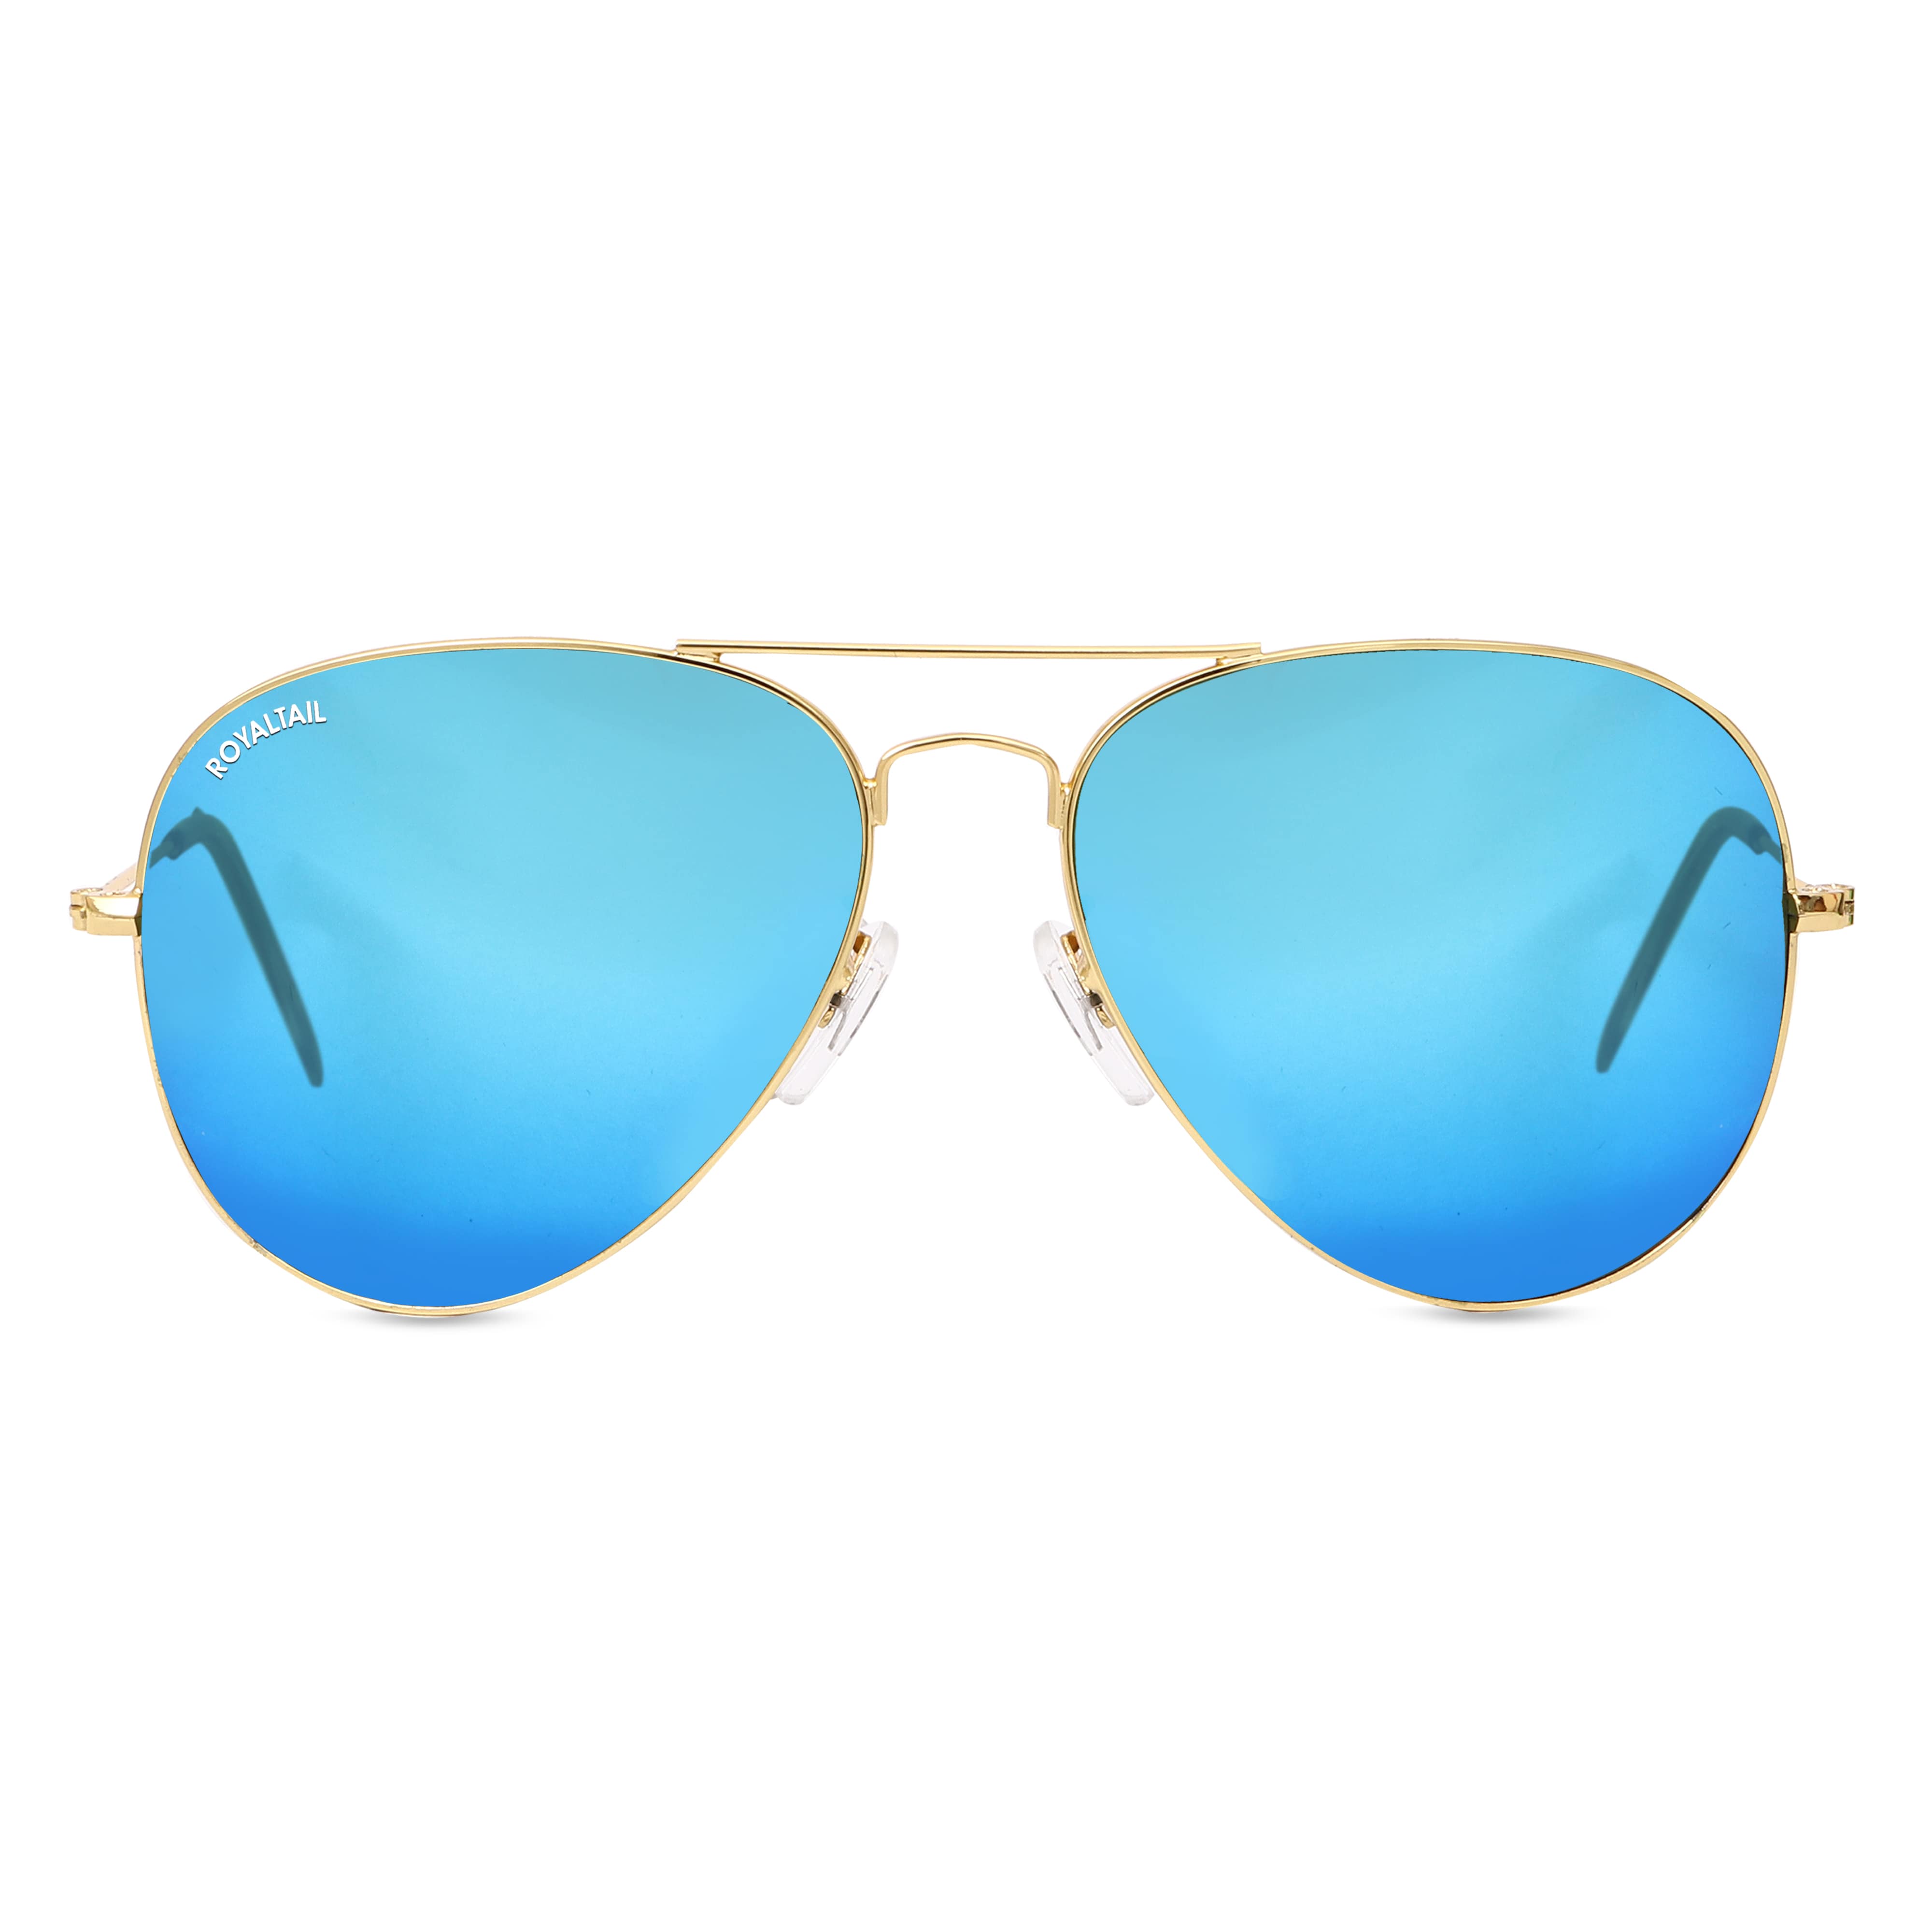 Styling Gold Sunglasses: A Timeless Trend | Zenni Optical Blog